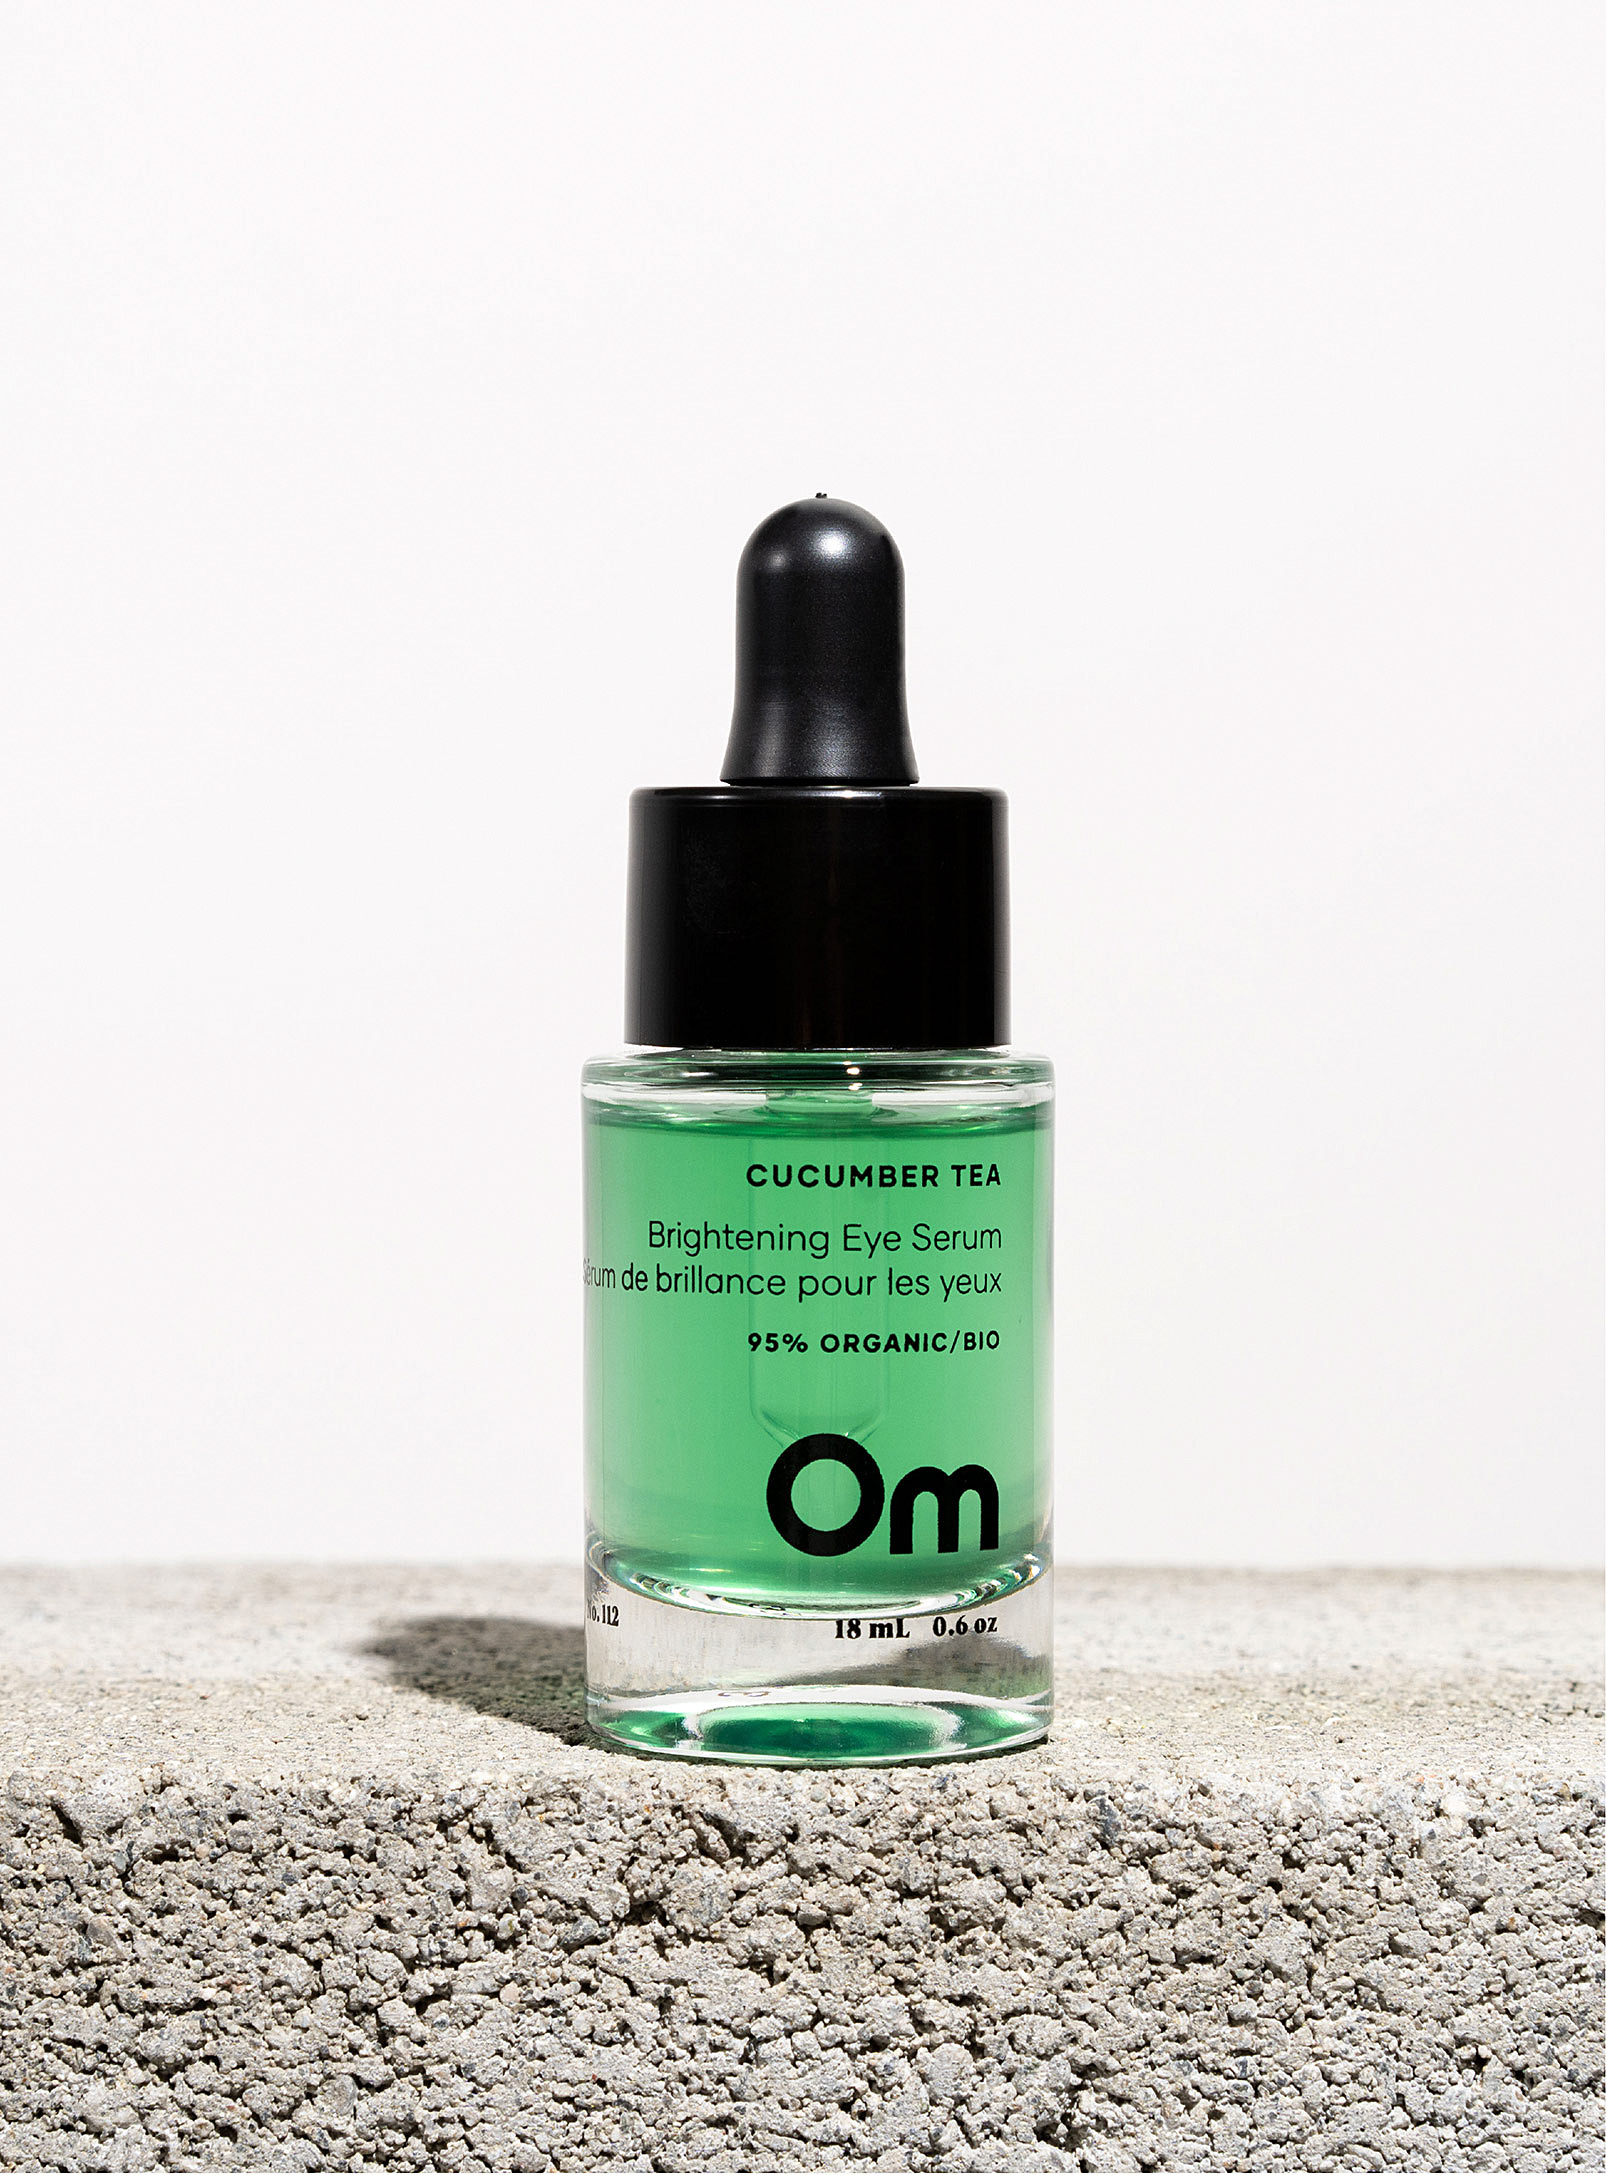 Om Organics - Cucumber Tea brightening eye serum